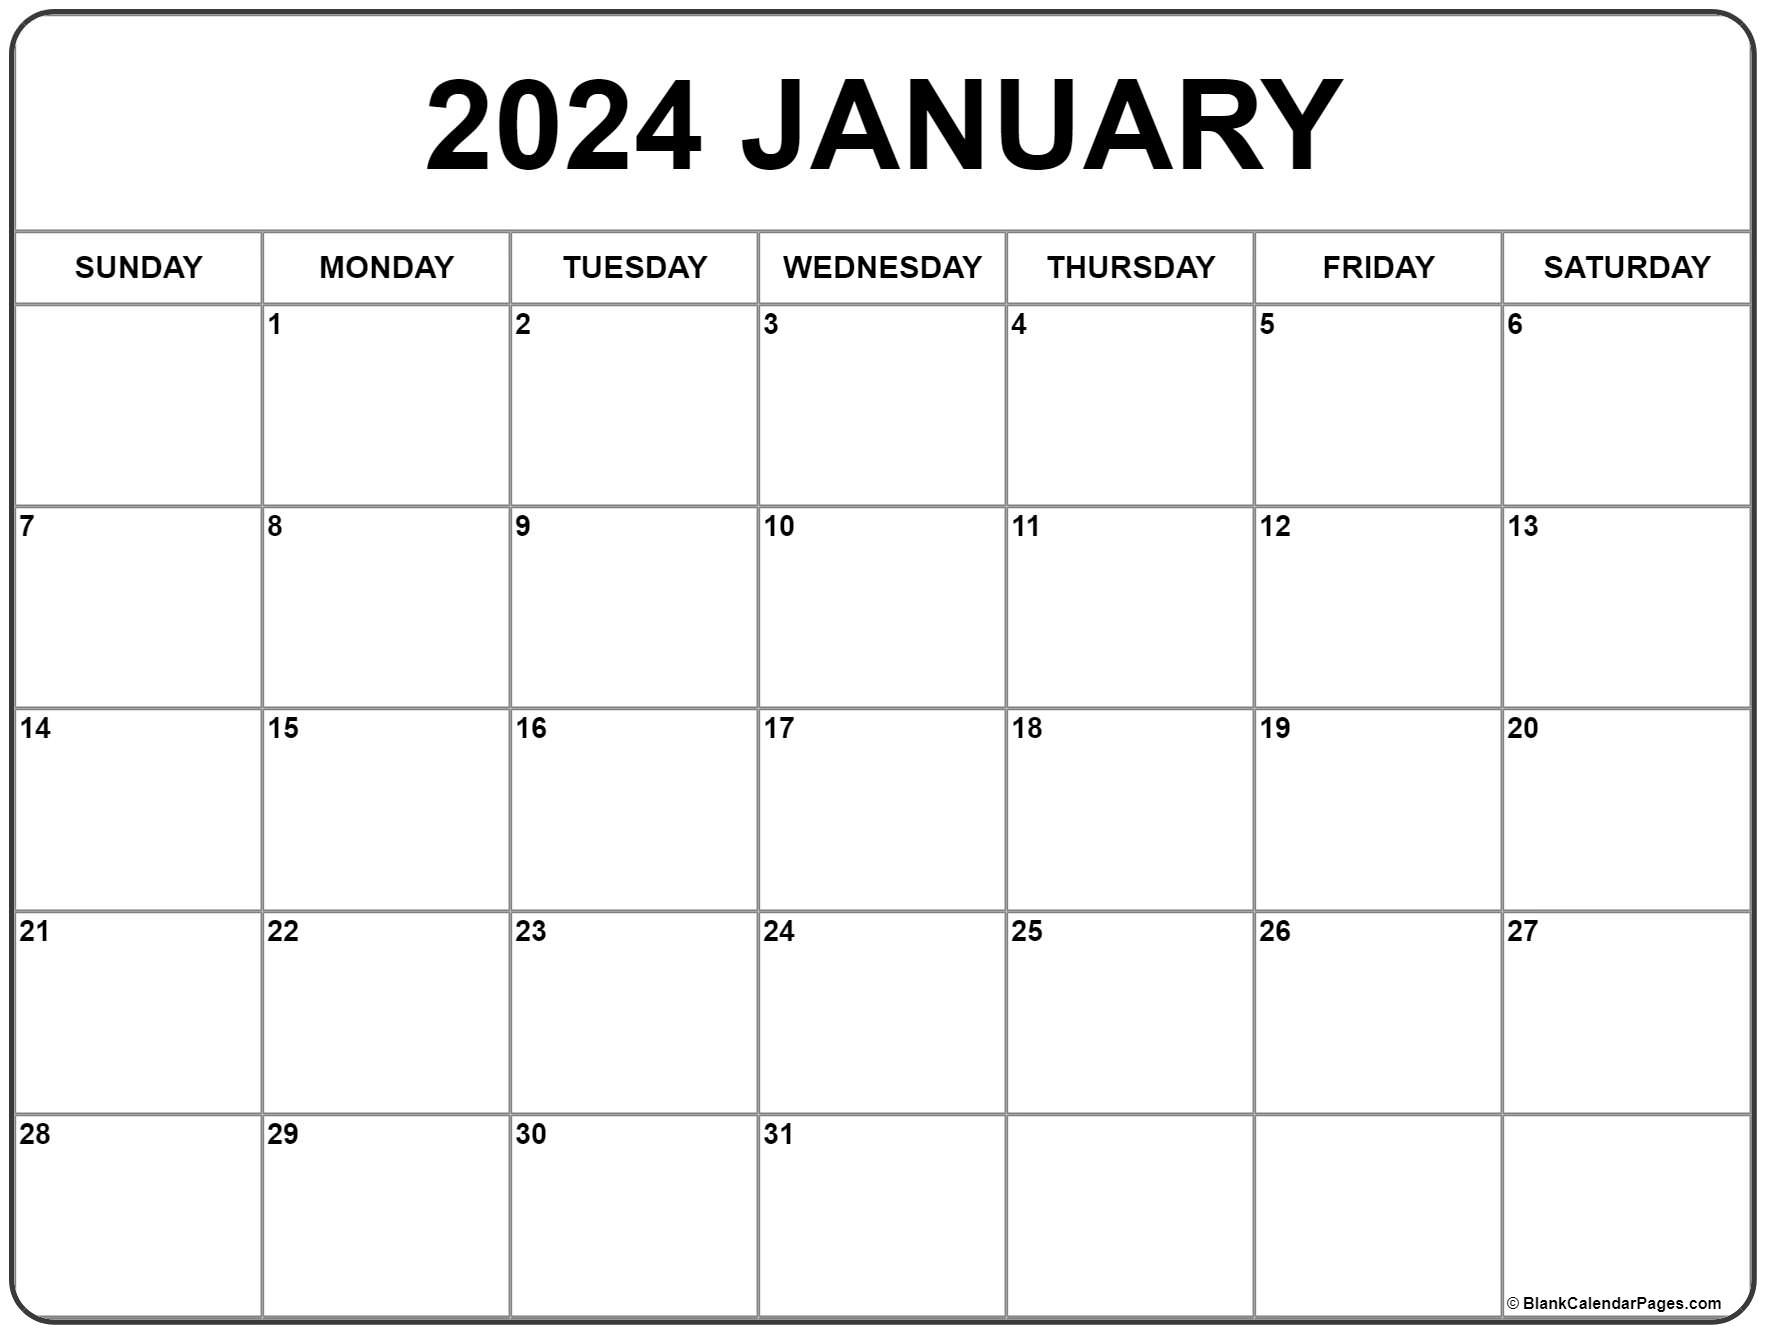 January 2024 Calendar | Free Printable Calendar for January 2024 Free Printable Calendar